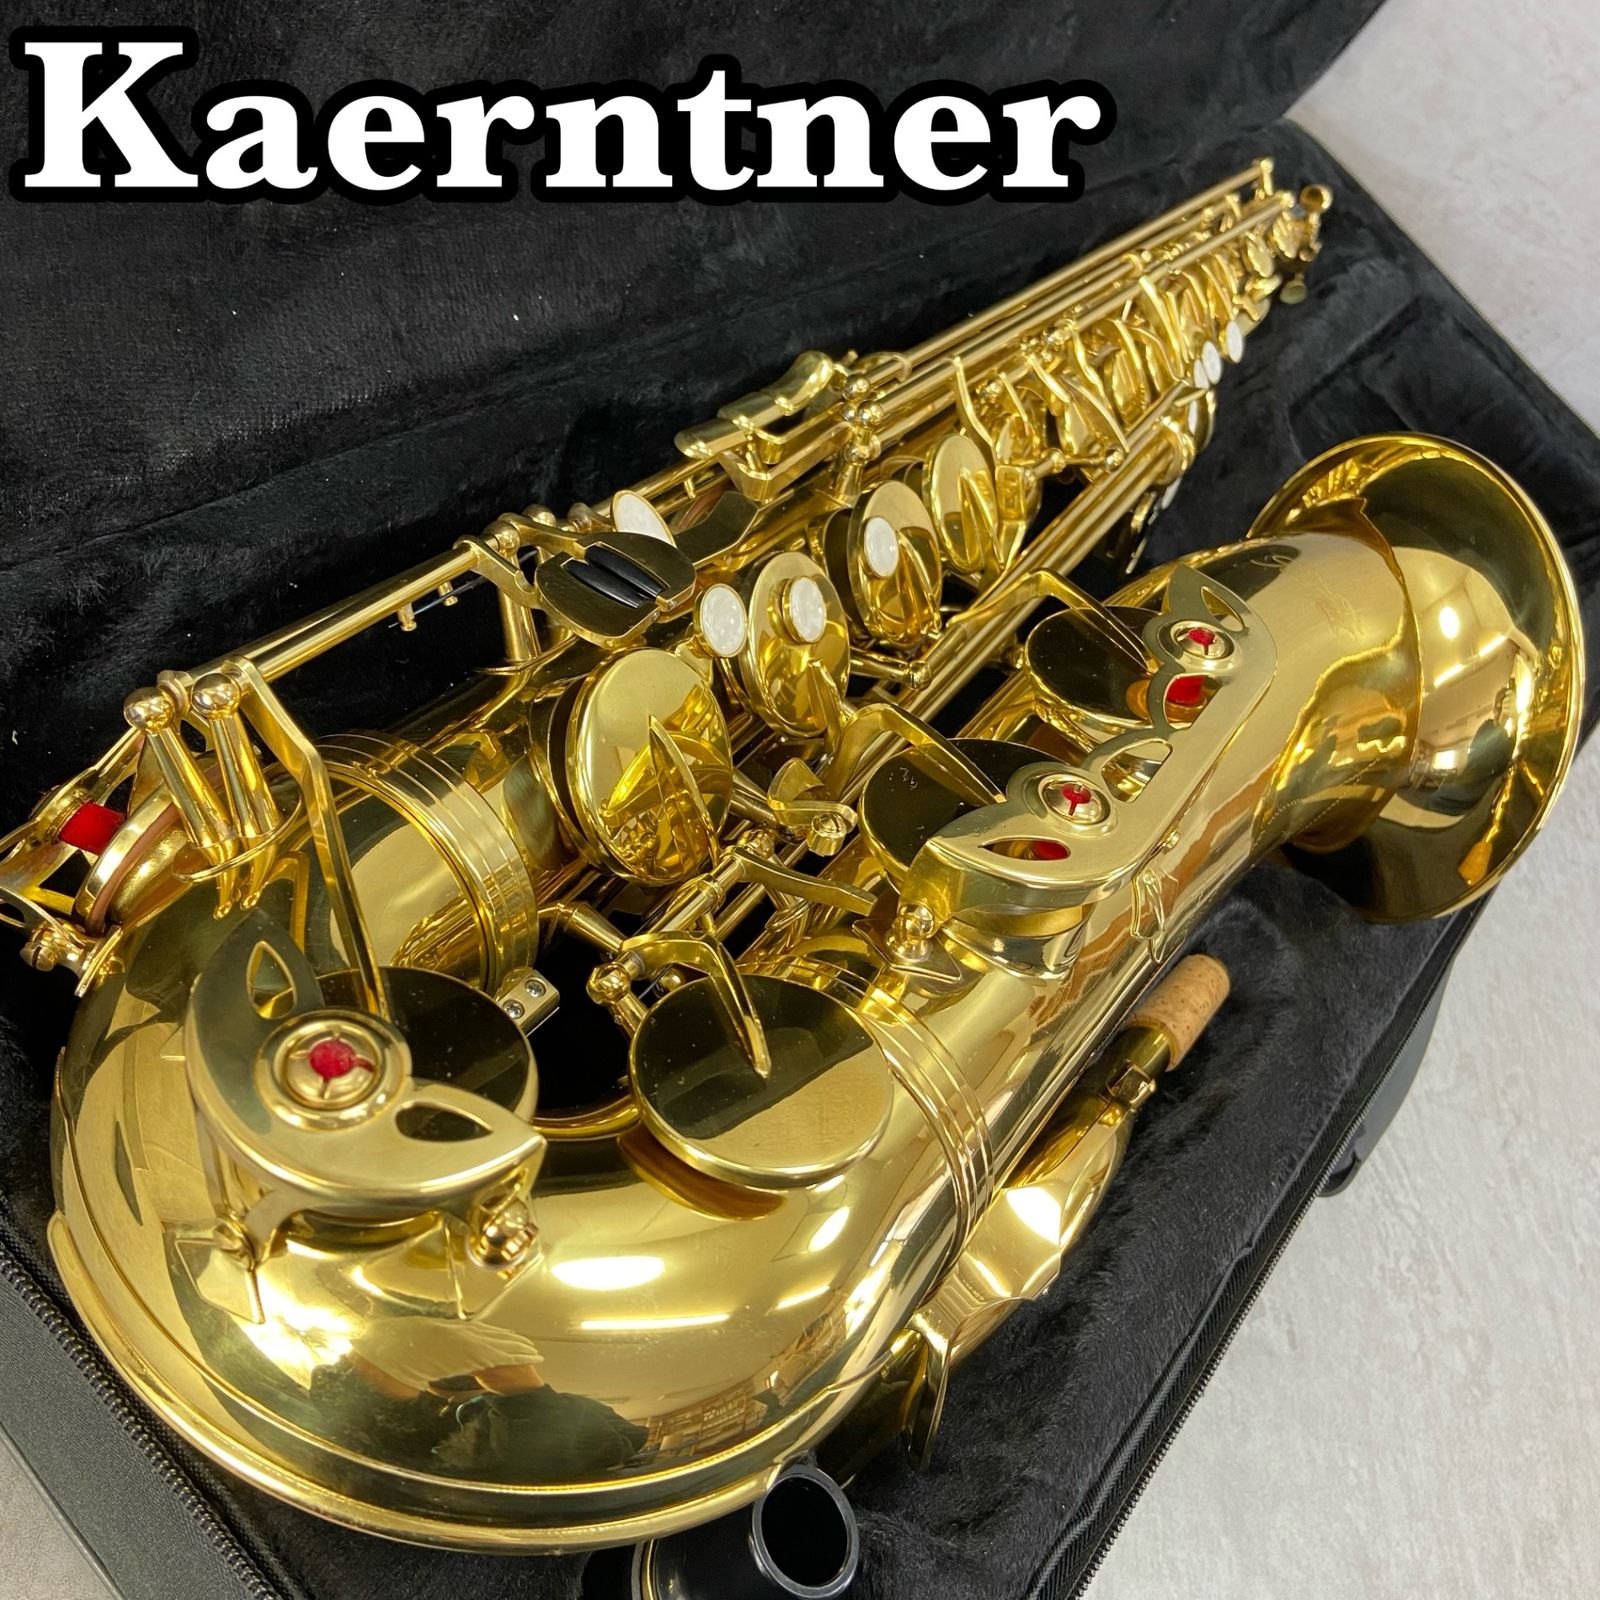 Kaerntner ケルントナー テナーサックス 管楽器 Saxophone サクソフォン クリアラッカー 初心者 入門用 付属品多数 - メルカリ